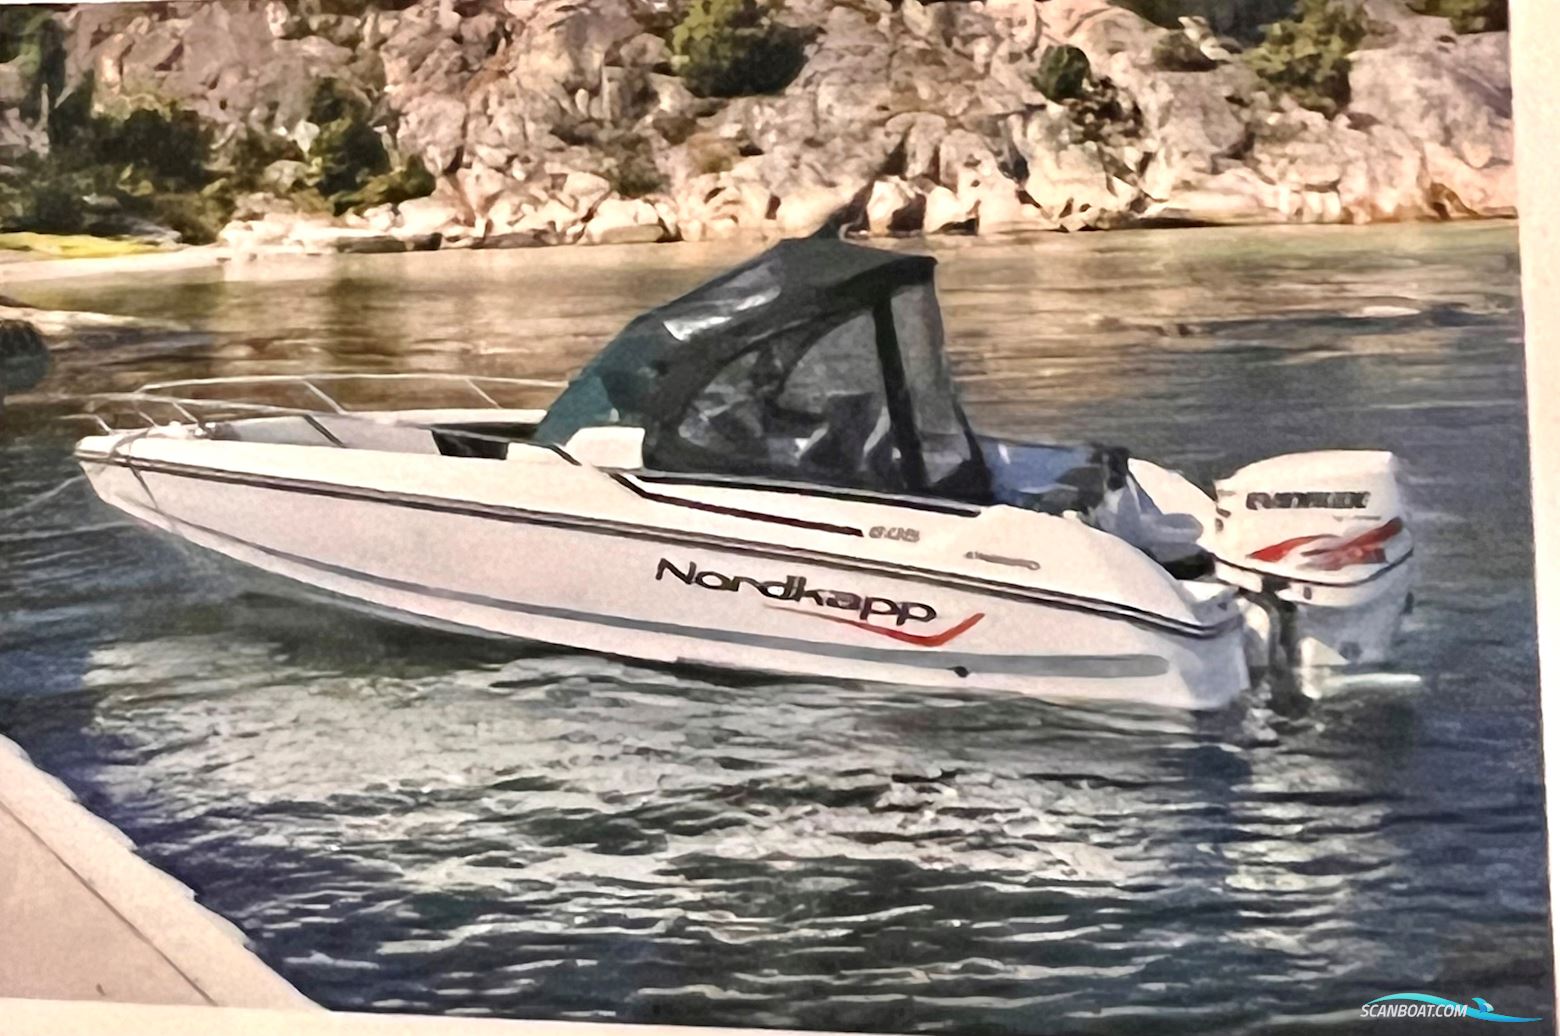 Nordkapp 605 Enduro Motor boat 2016, with Evinrude E-Tec 150 H.O. engine, Sweden